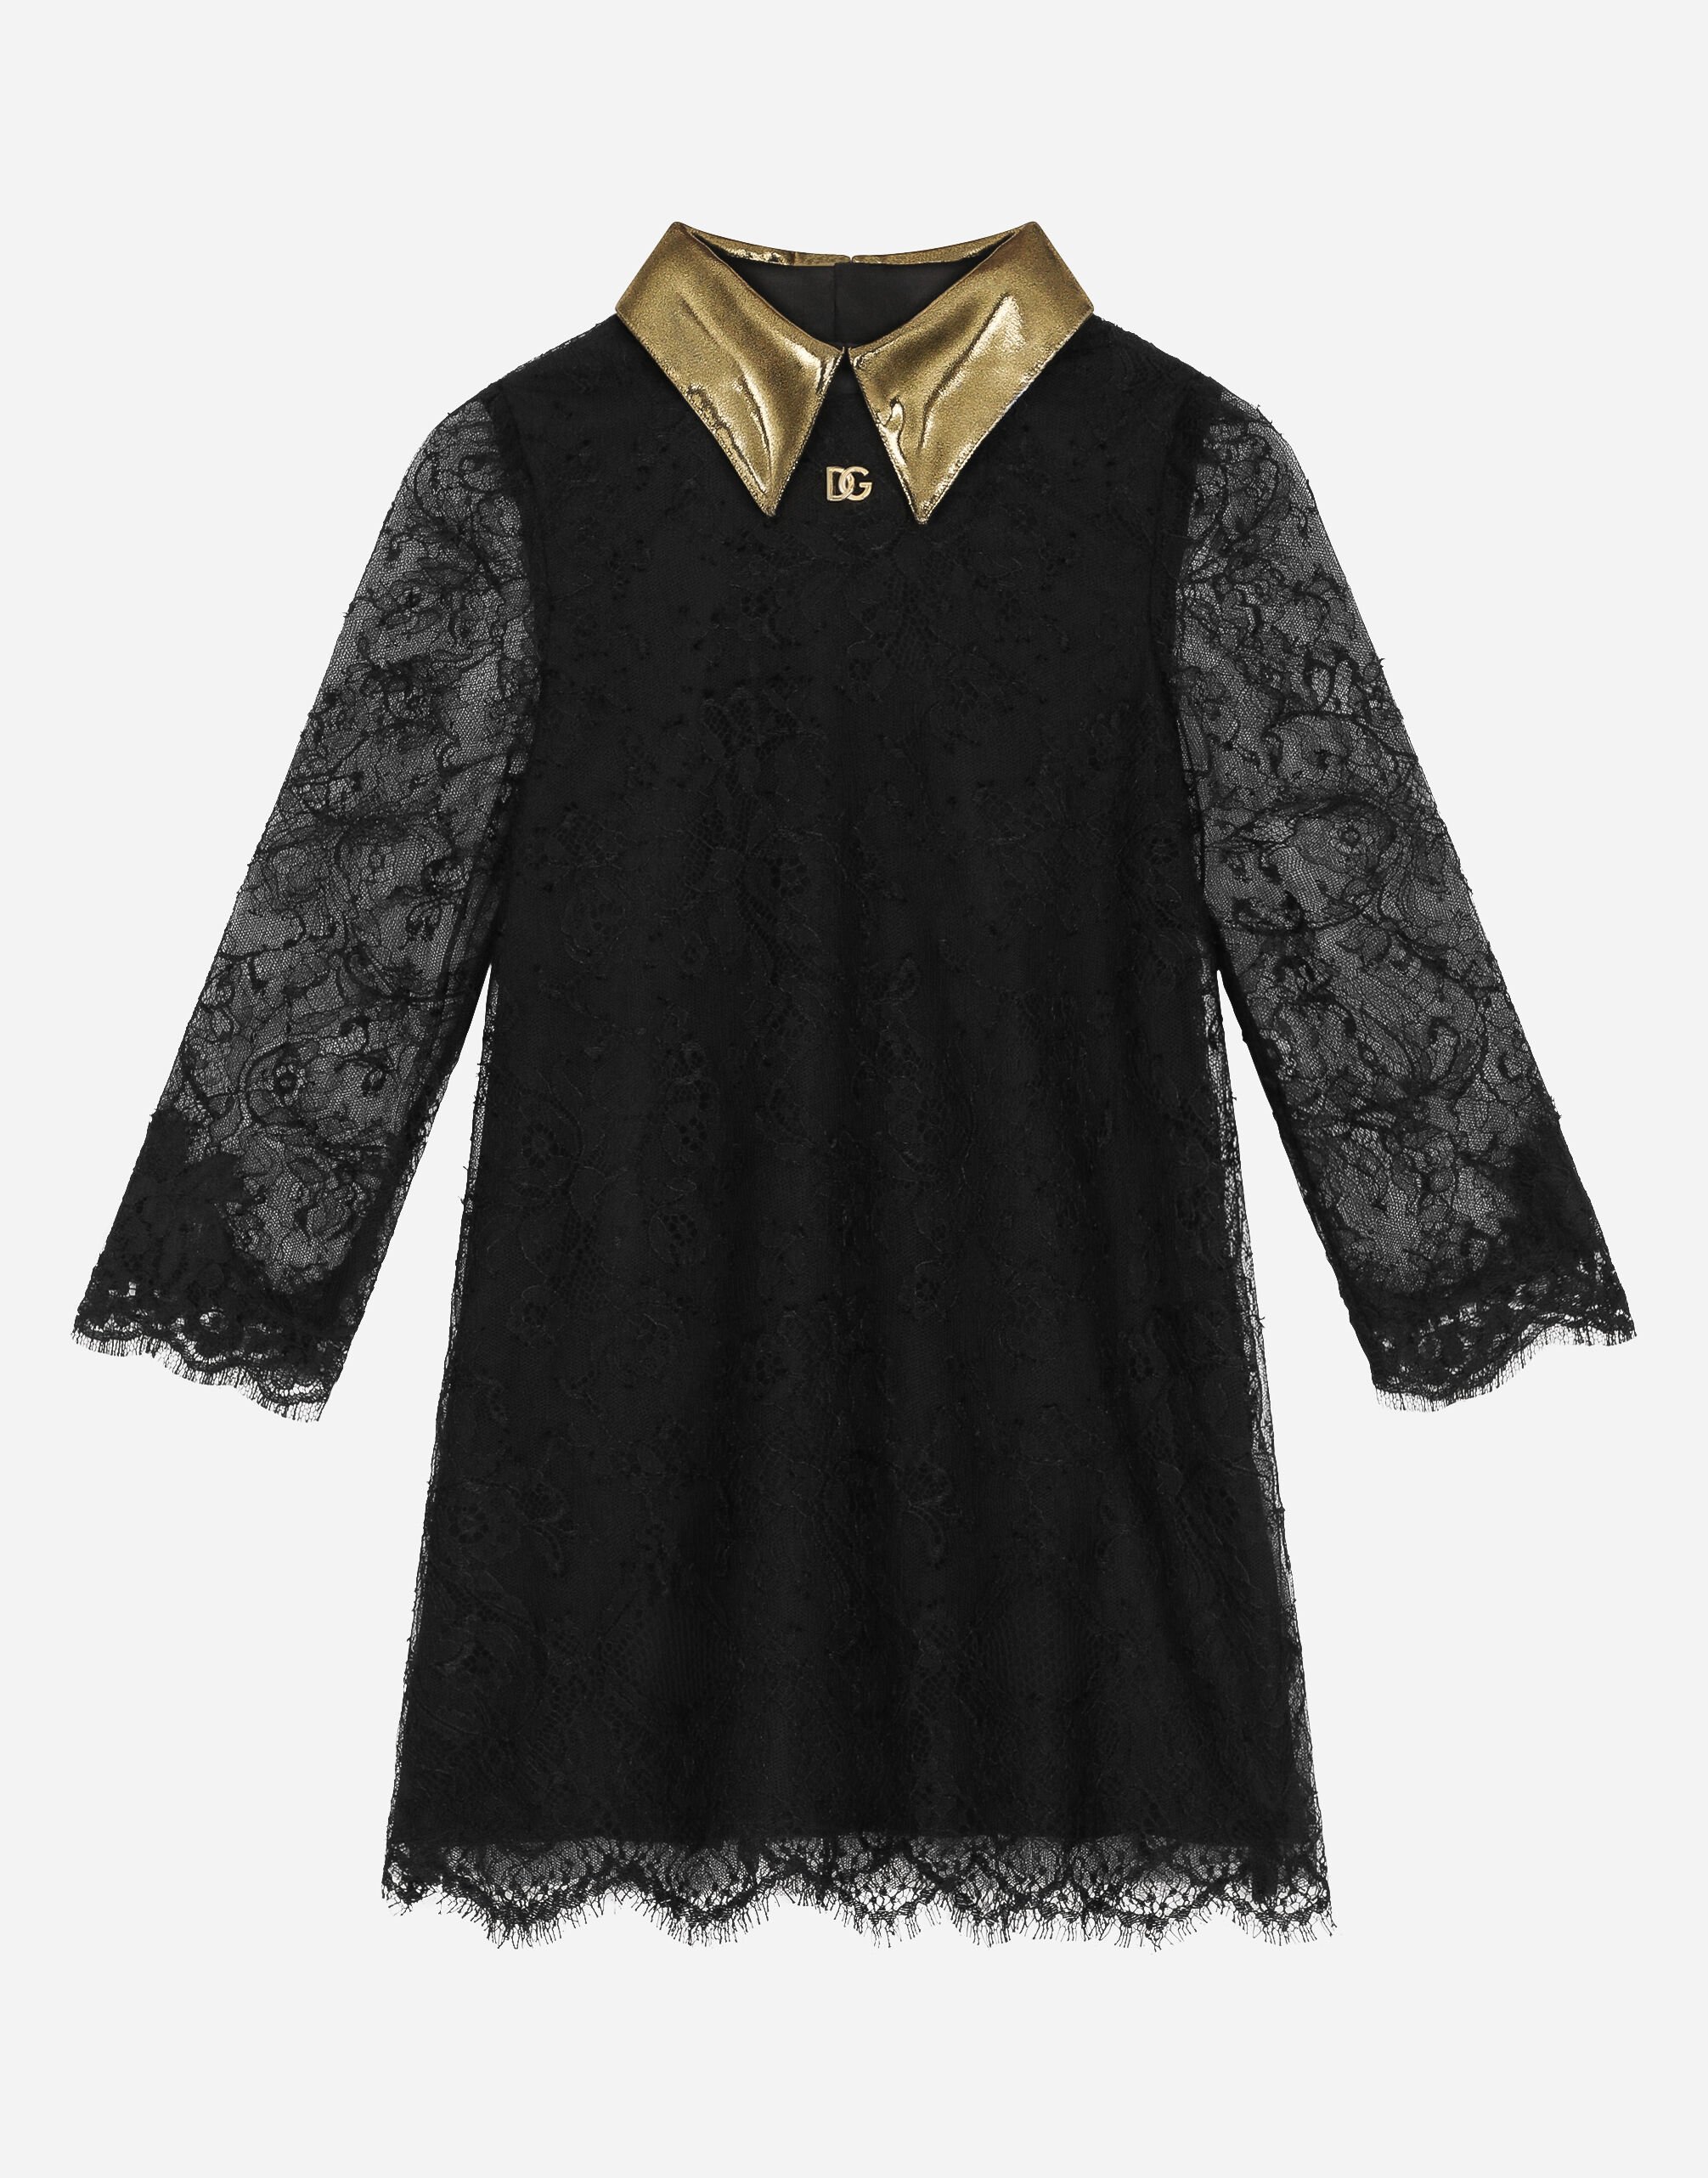 Dolce & Gabbana Long-sleeved lace dress Black LB1A58G0U05